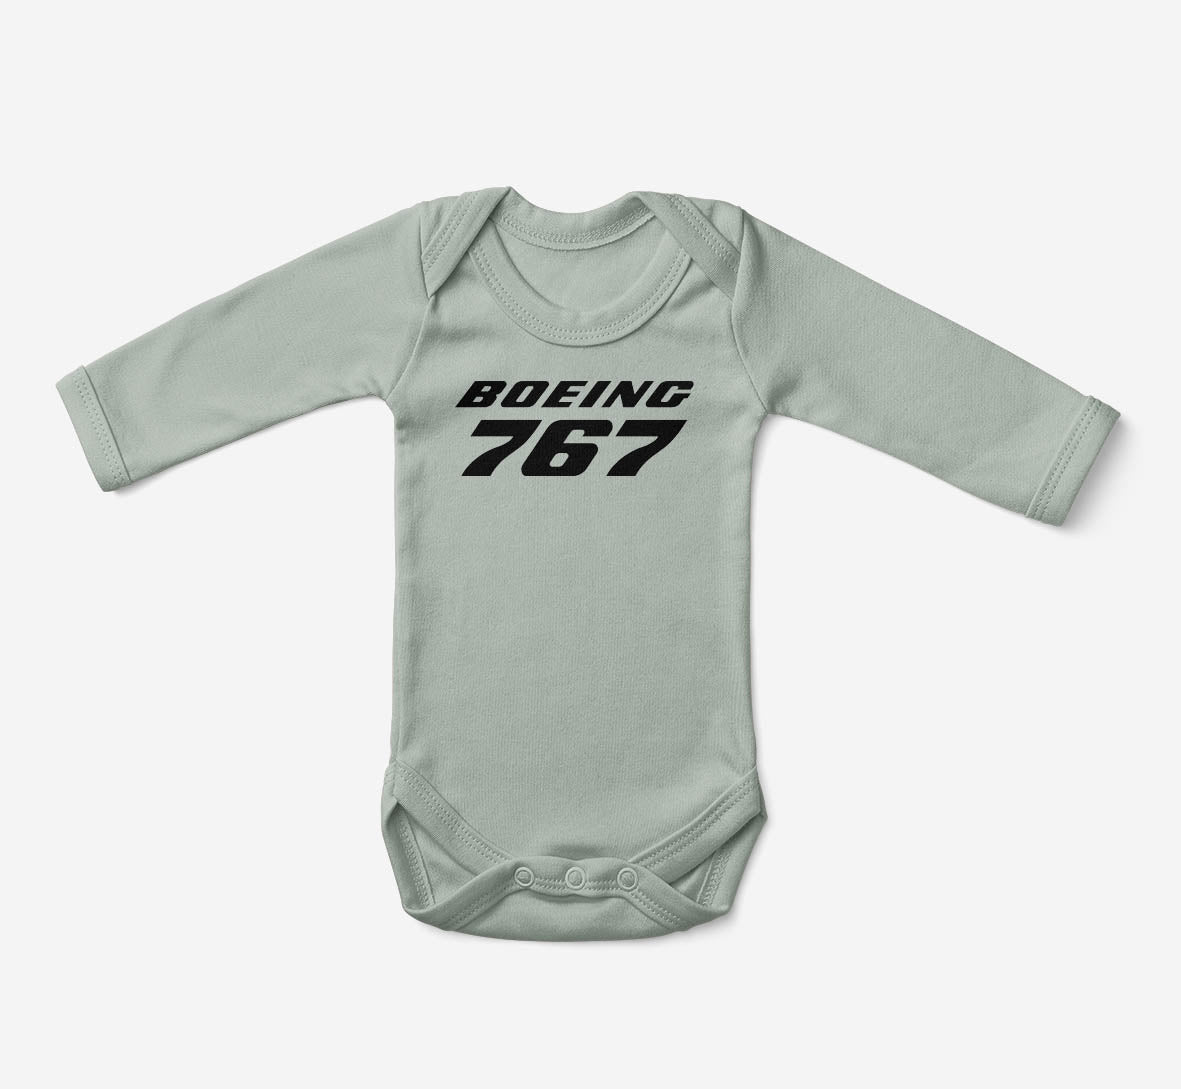 Boeing 767 & Text Designed Baby Bodysuits